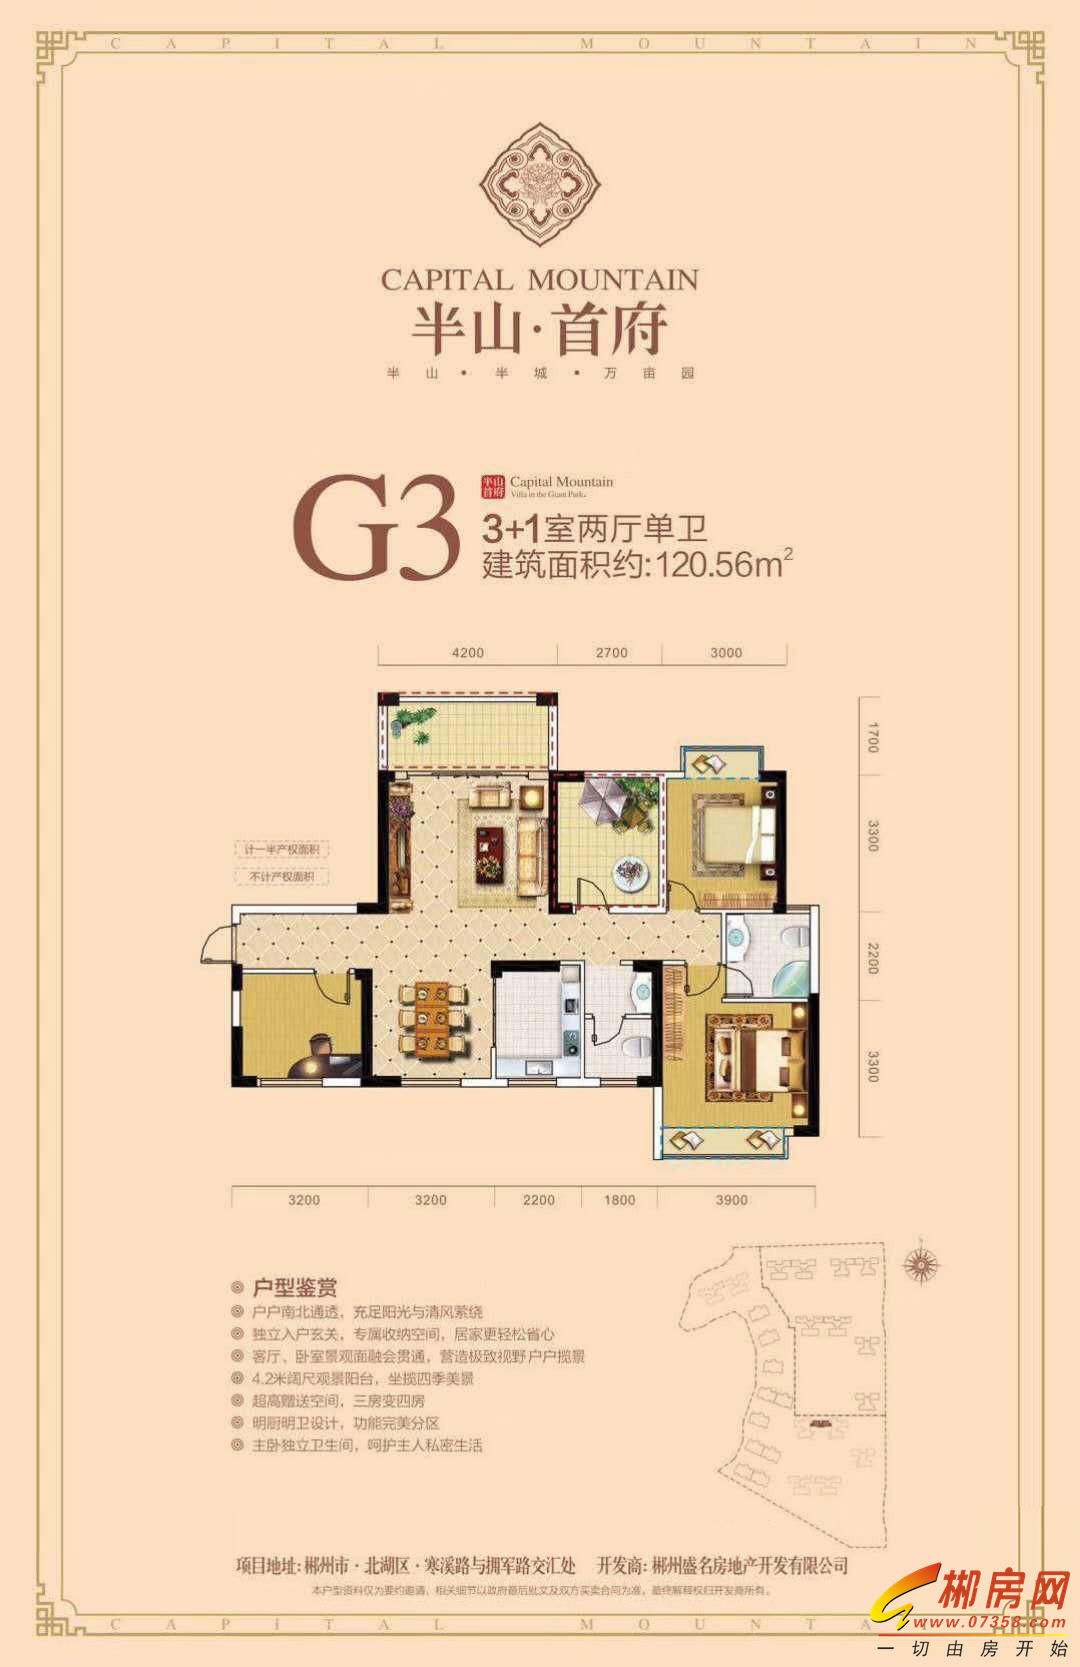 G3 3+1室两厅